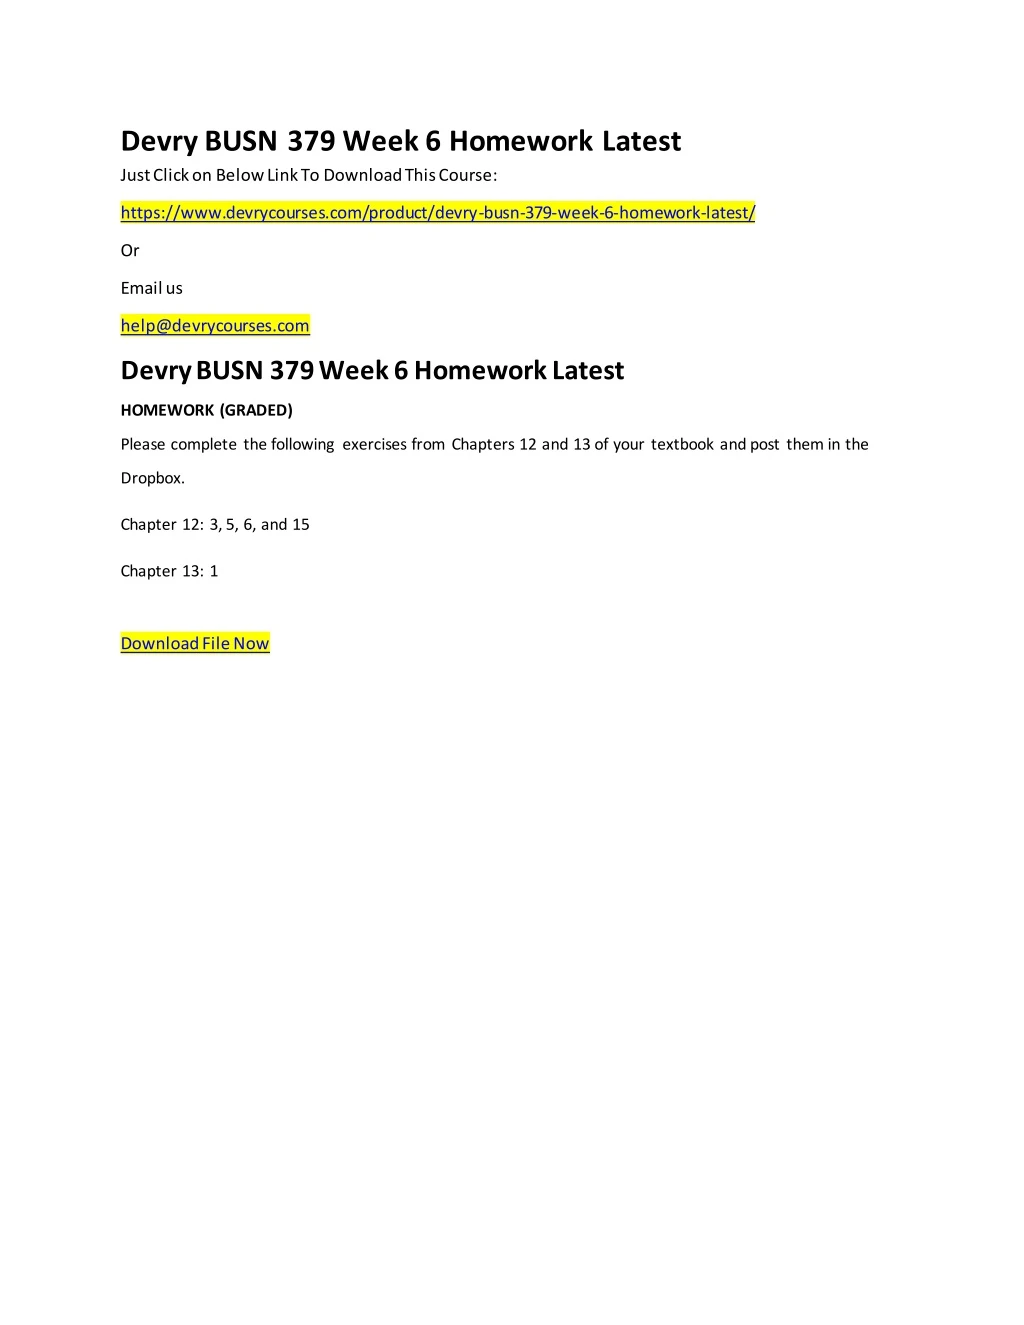 devry busn 379 week 6 homework latest just click